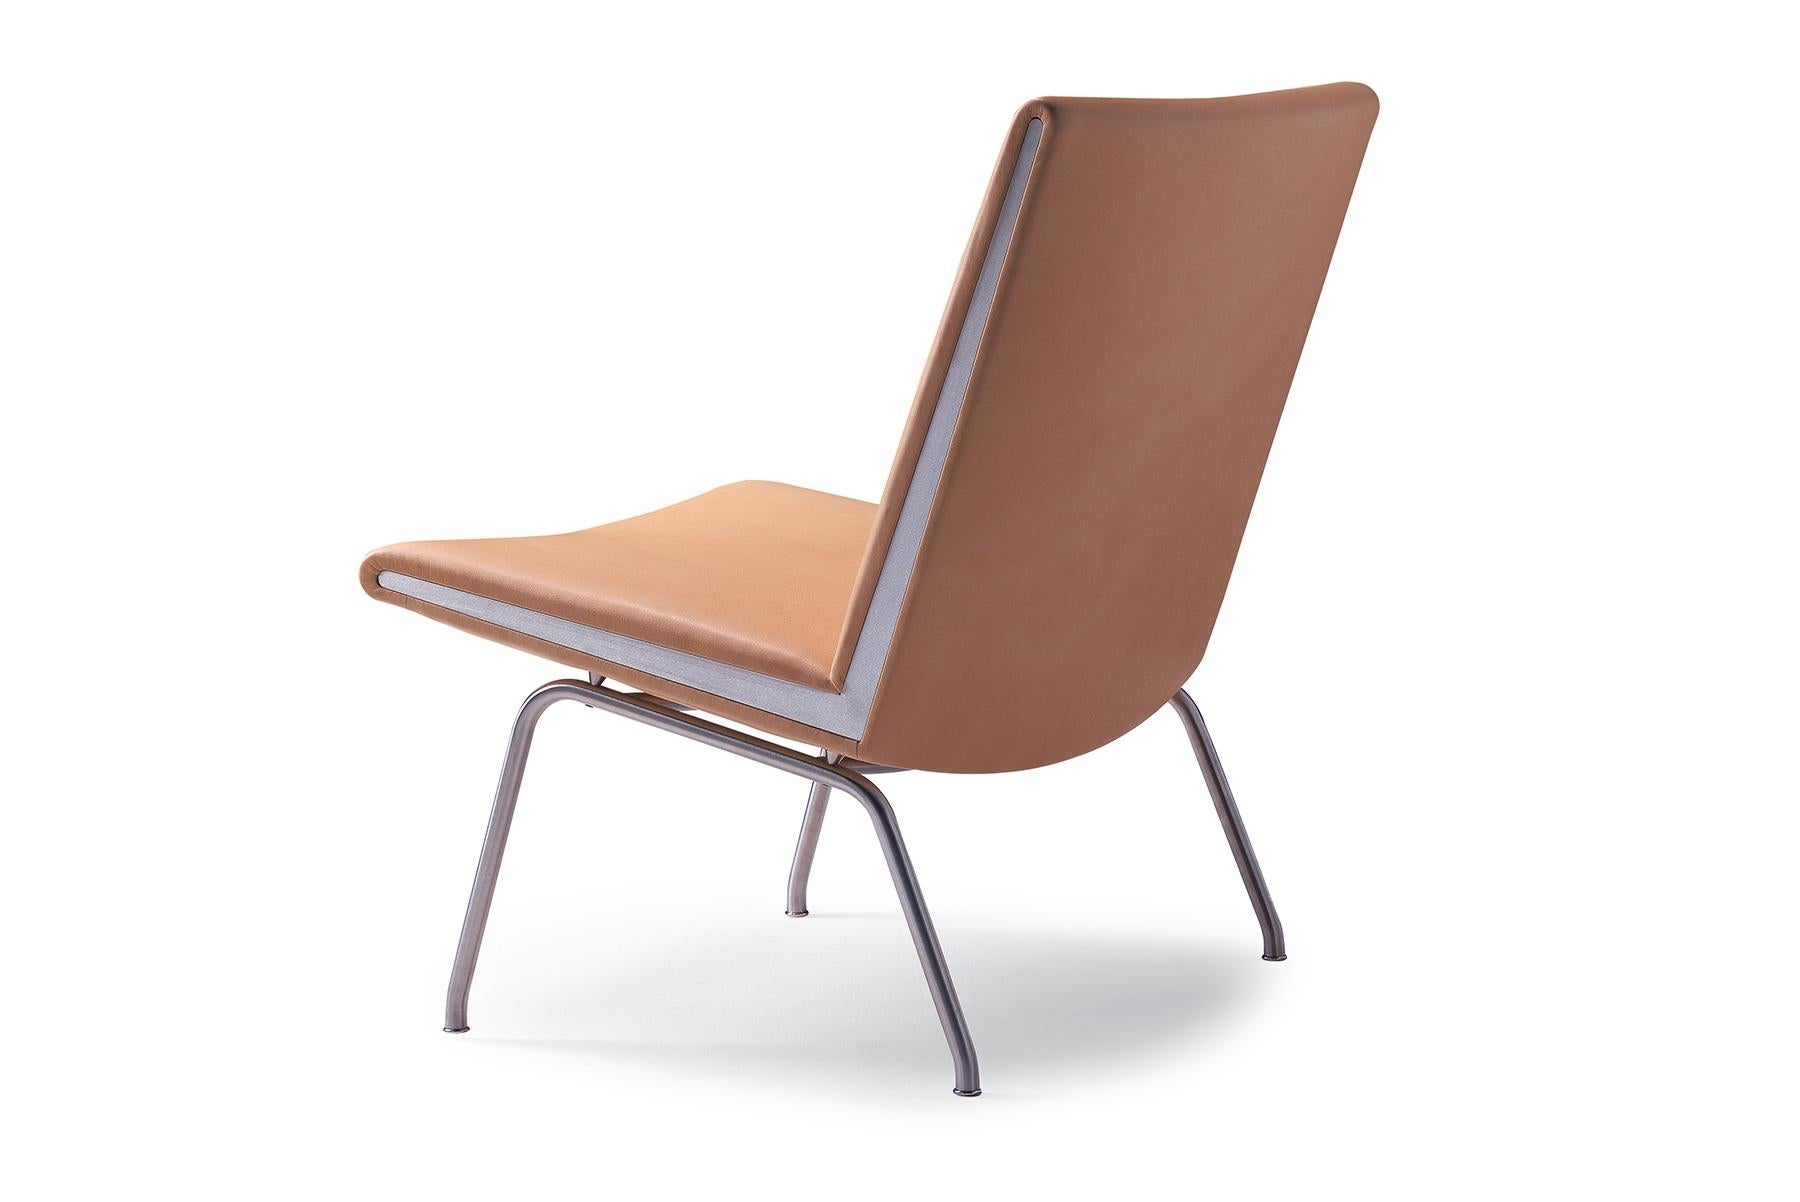 American Hans J. Wegner’s Ch401 Lounge Chair